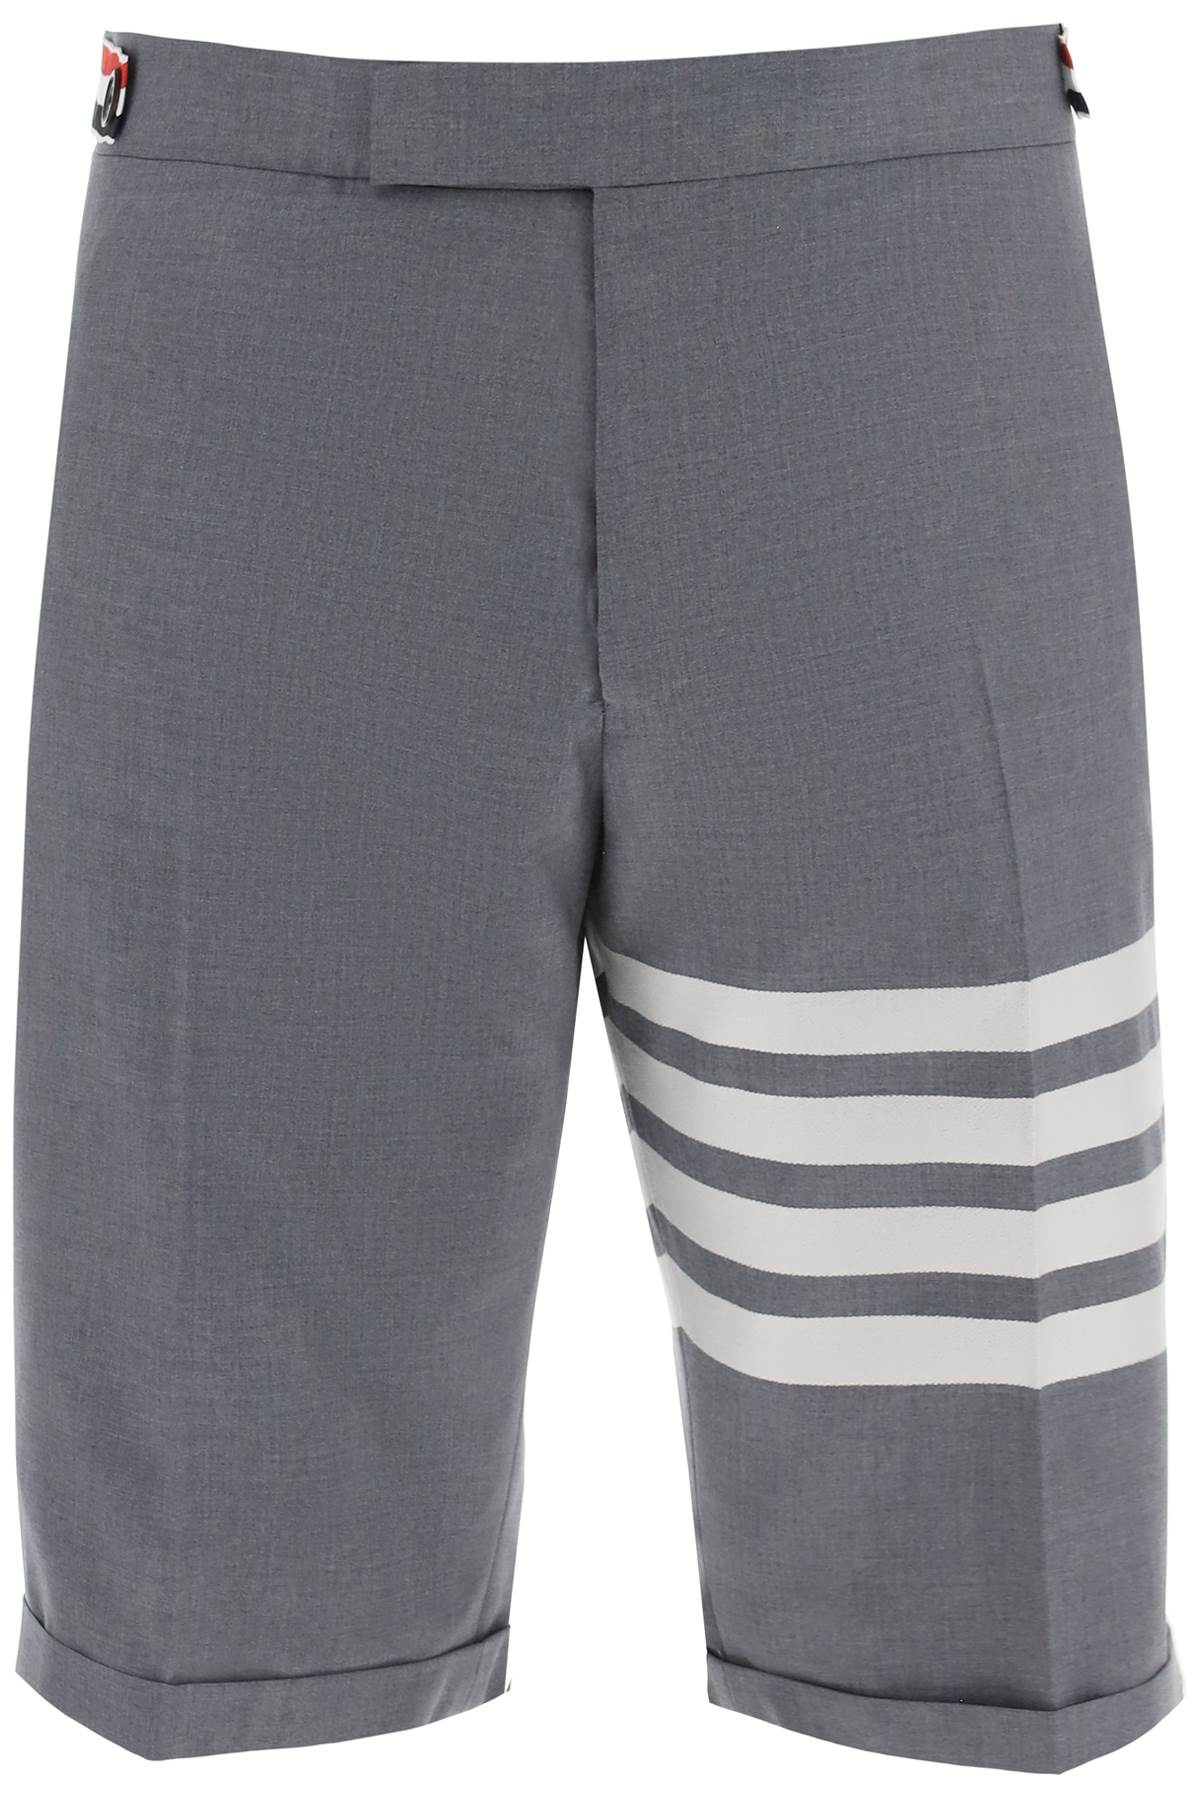 Thom browne 4-bar shorts in light wool-0